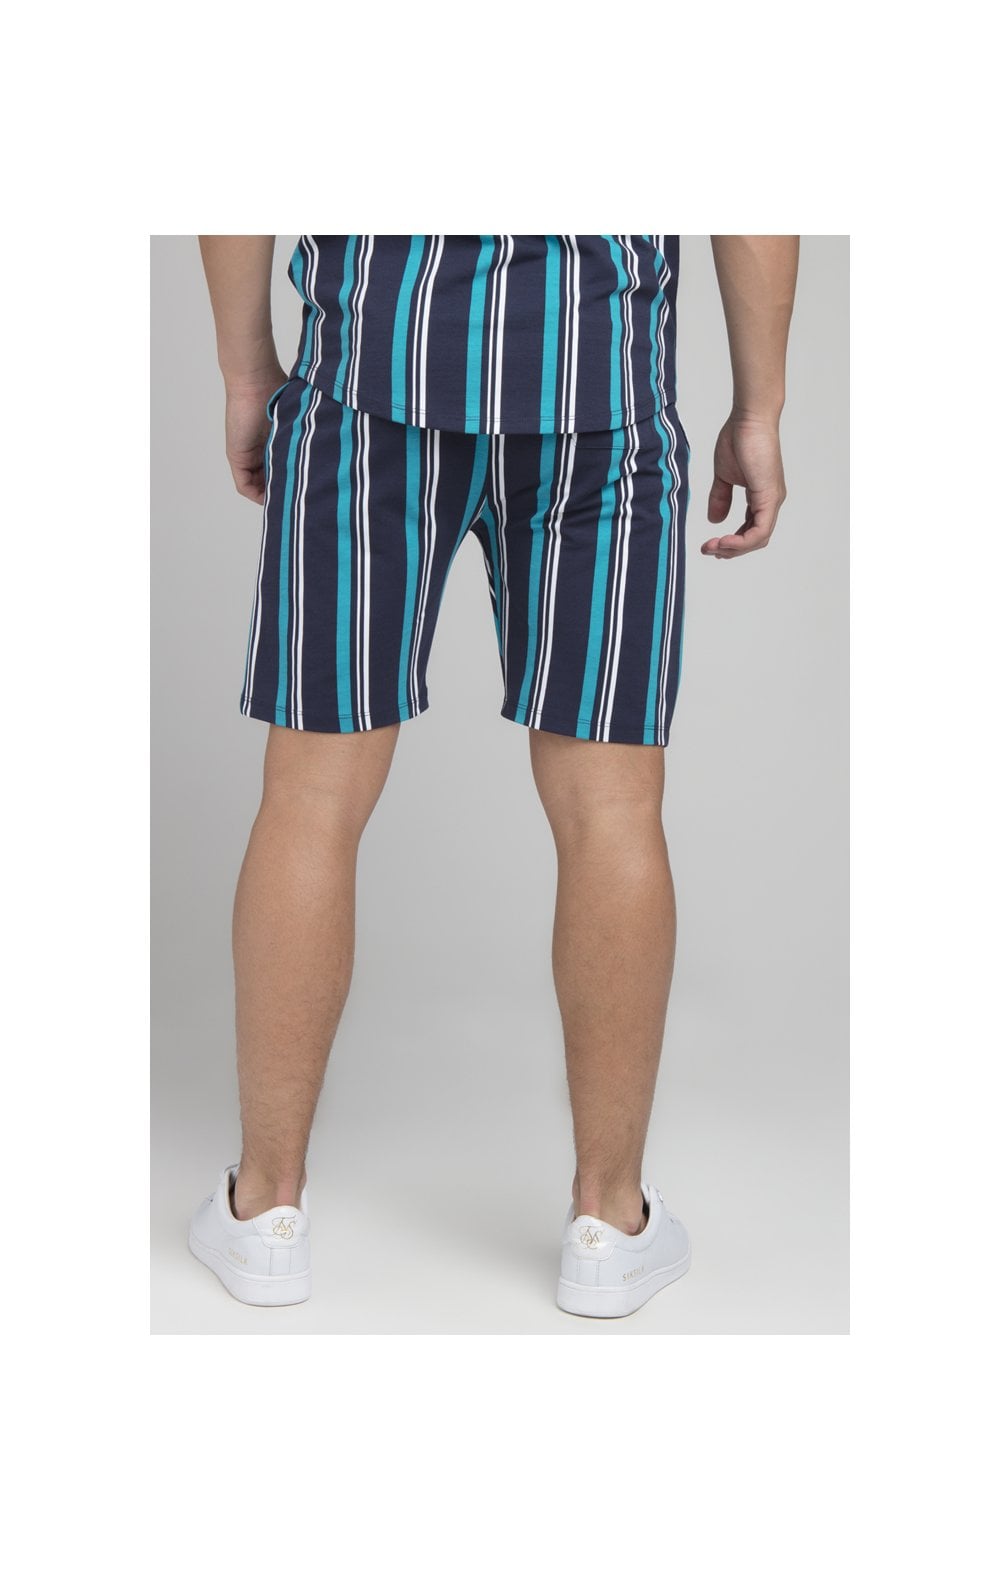 Illusive London Stripe Shorts - Navy & Teal (2)